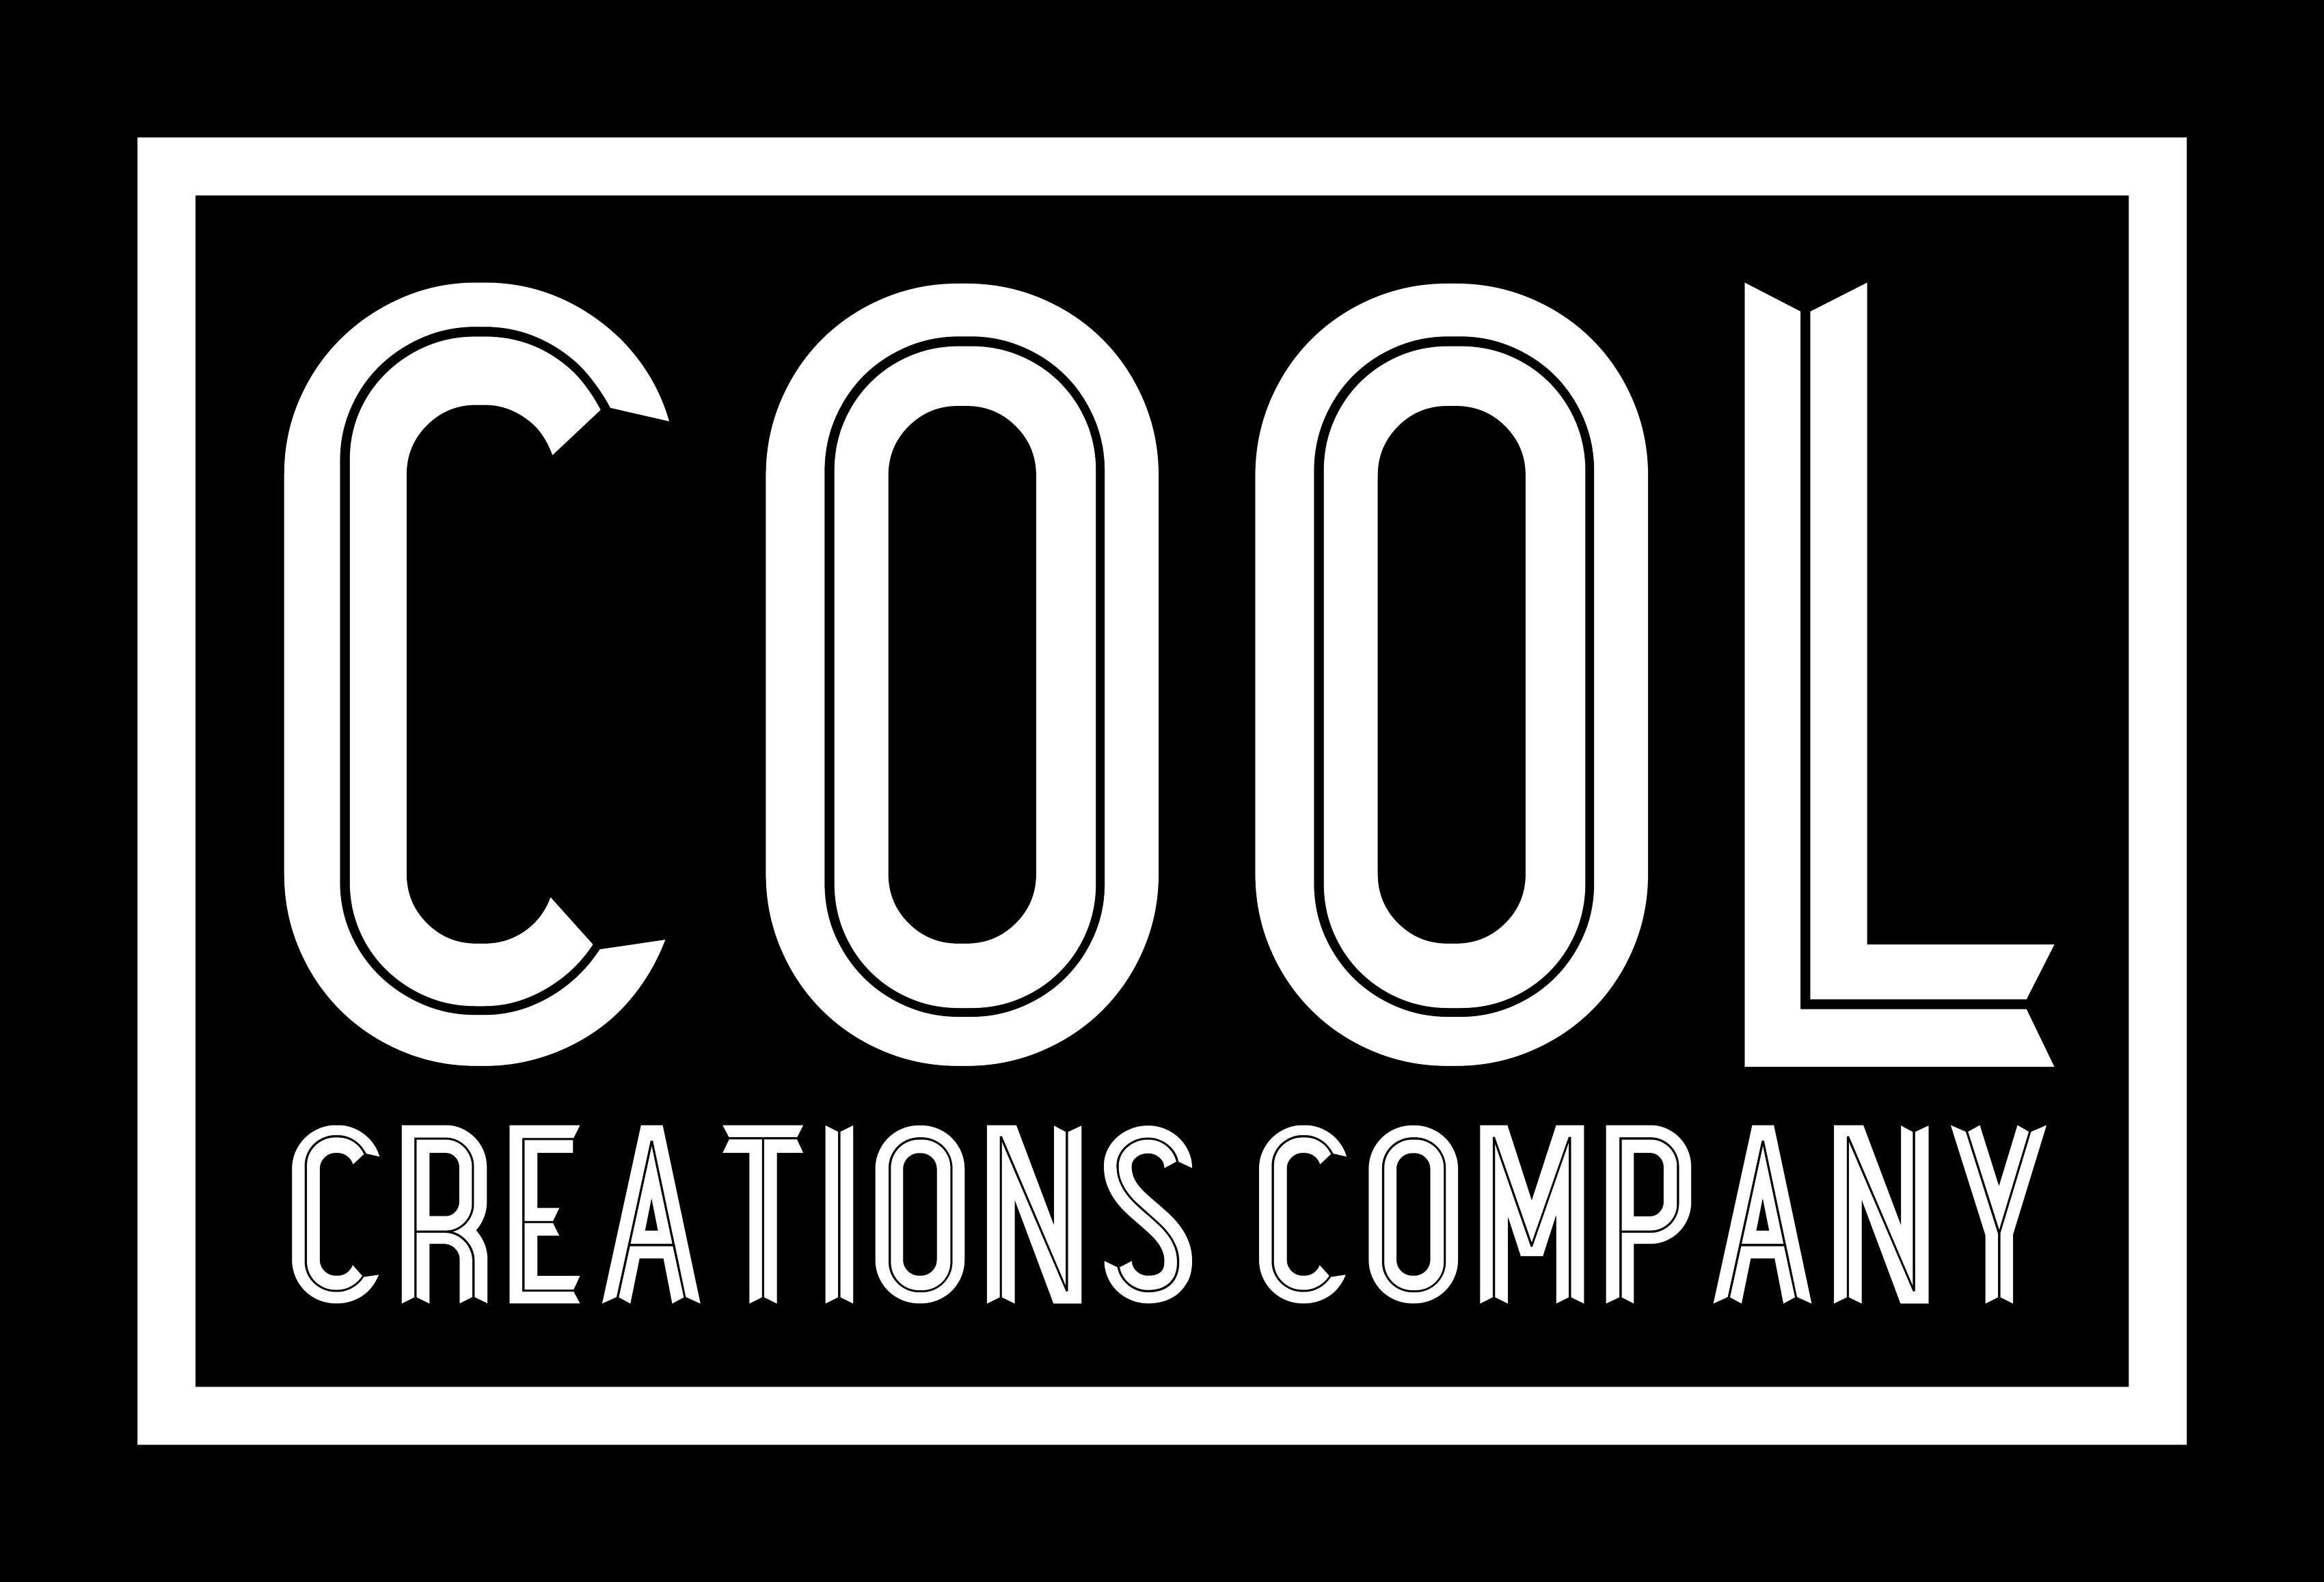 Cool Creations Company